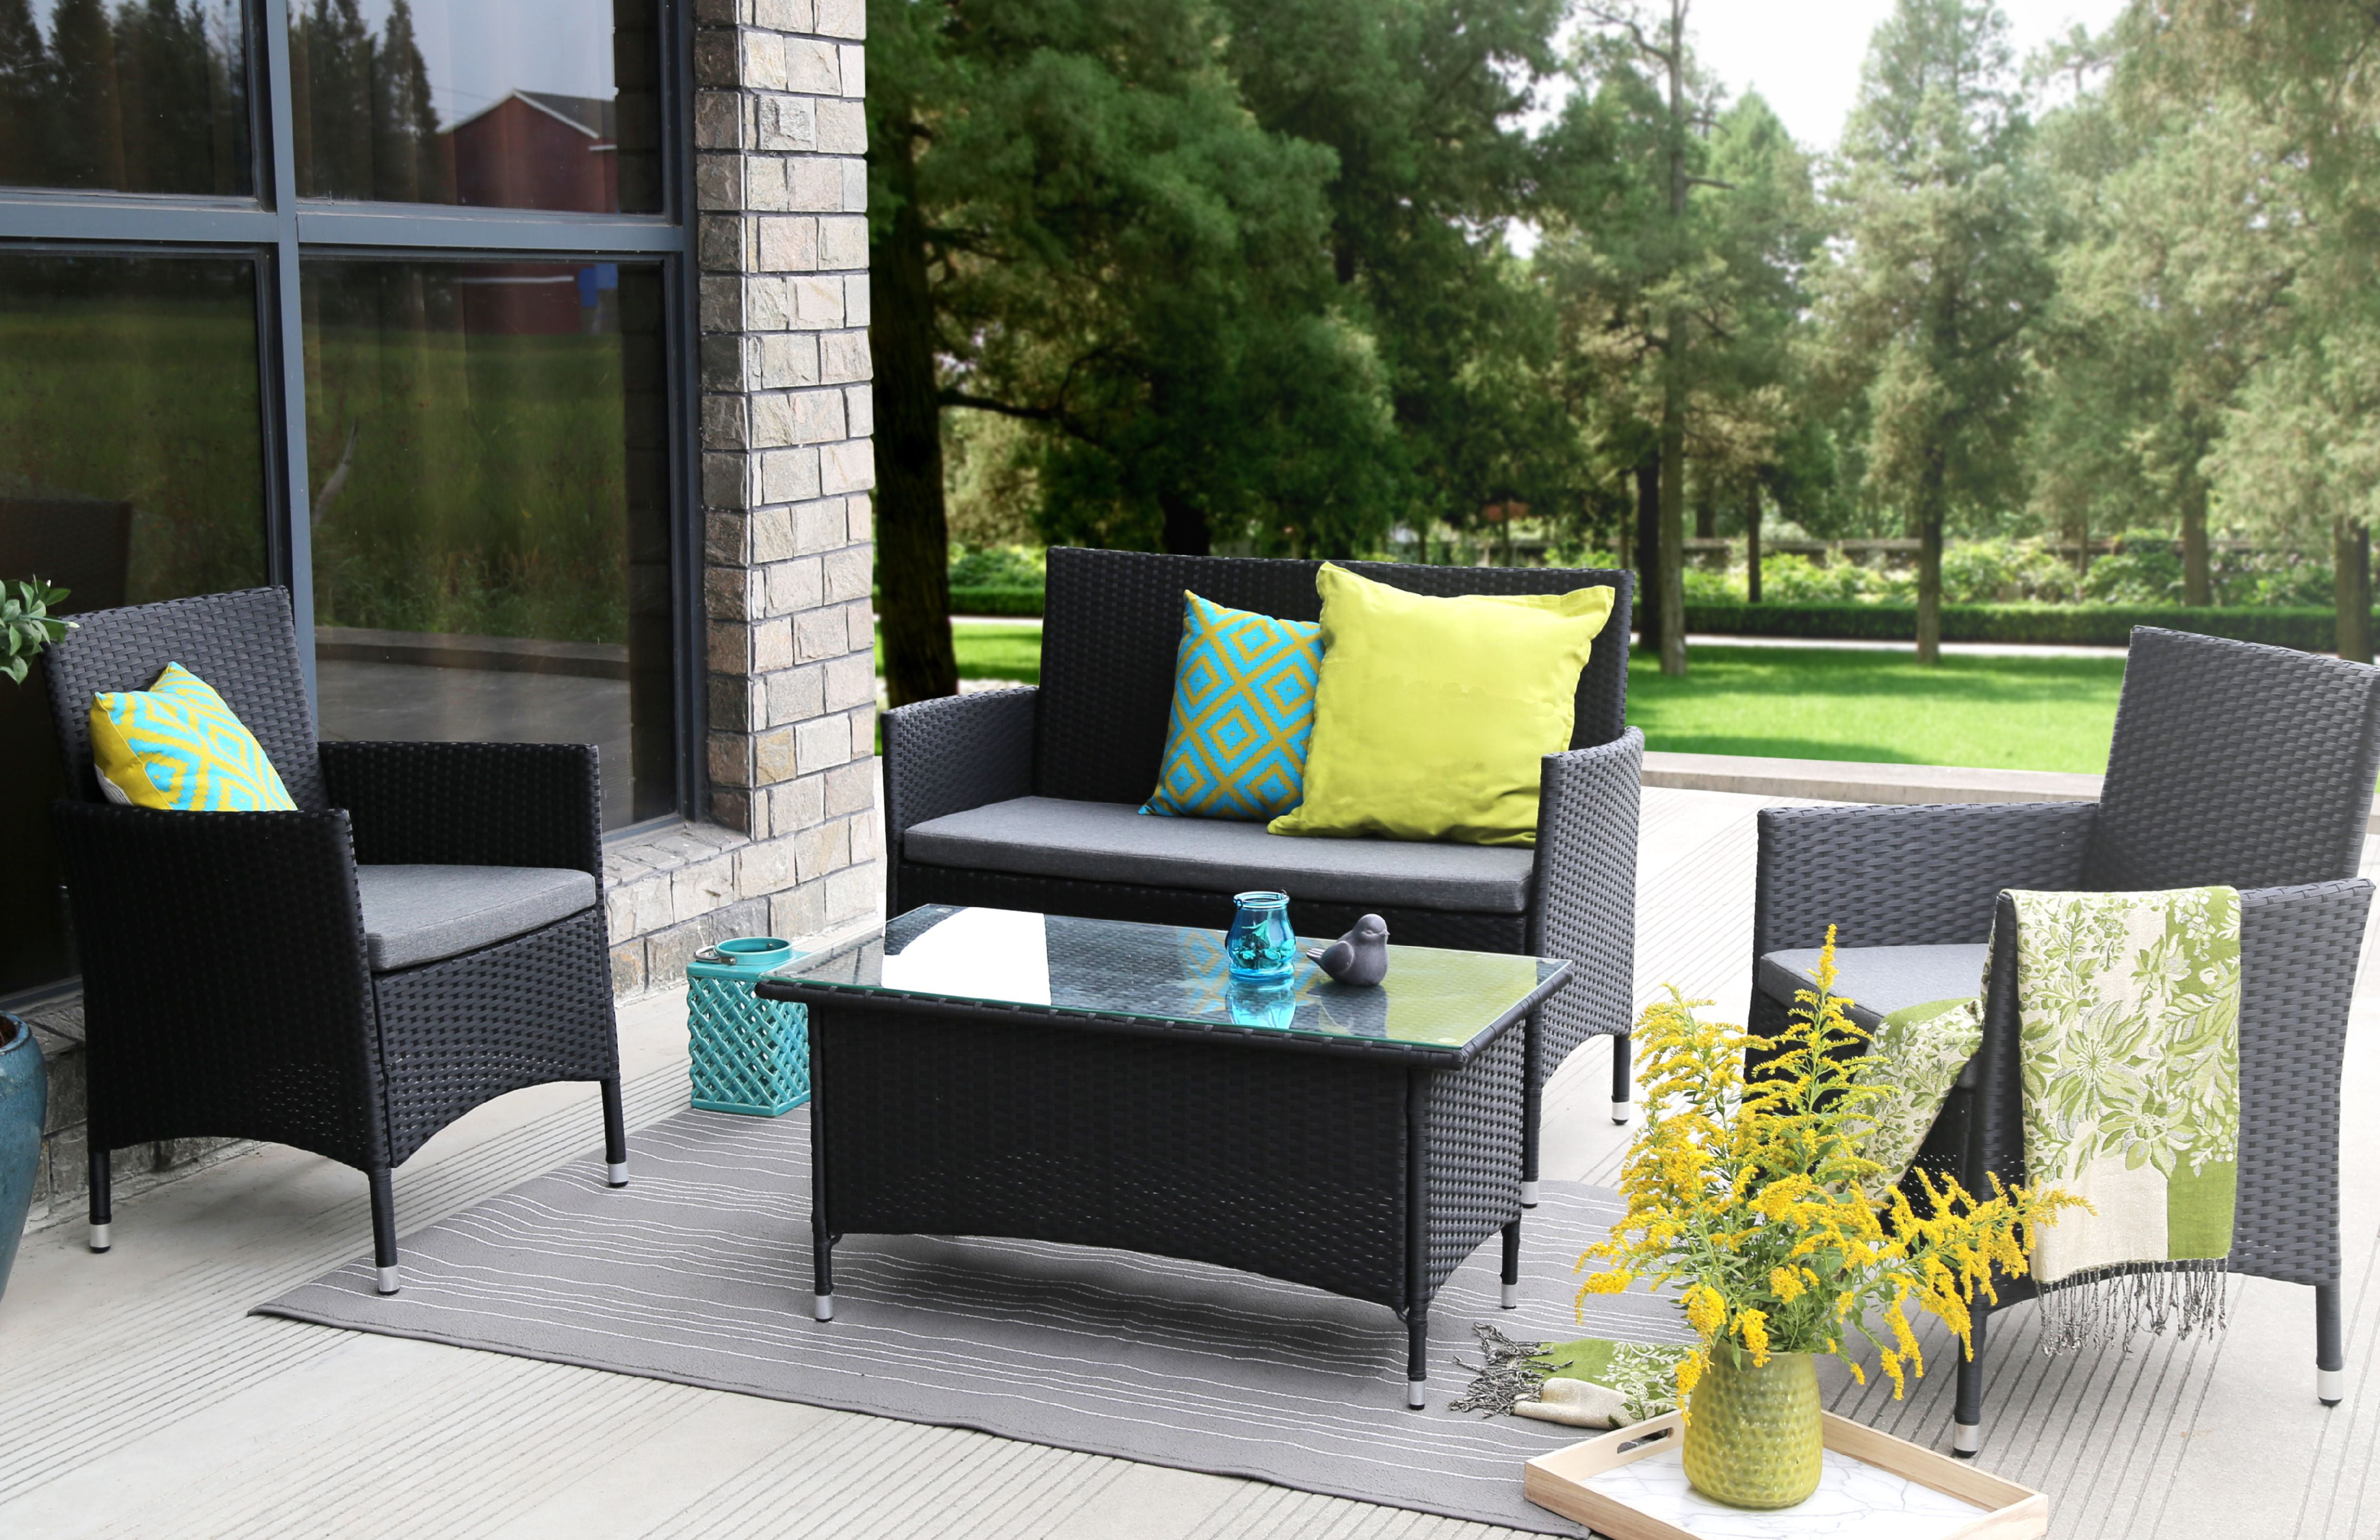  garden patio furniture